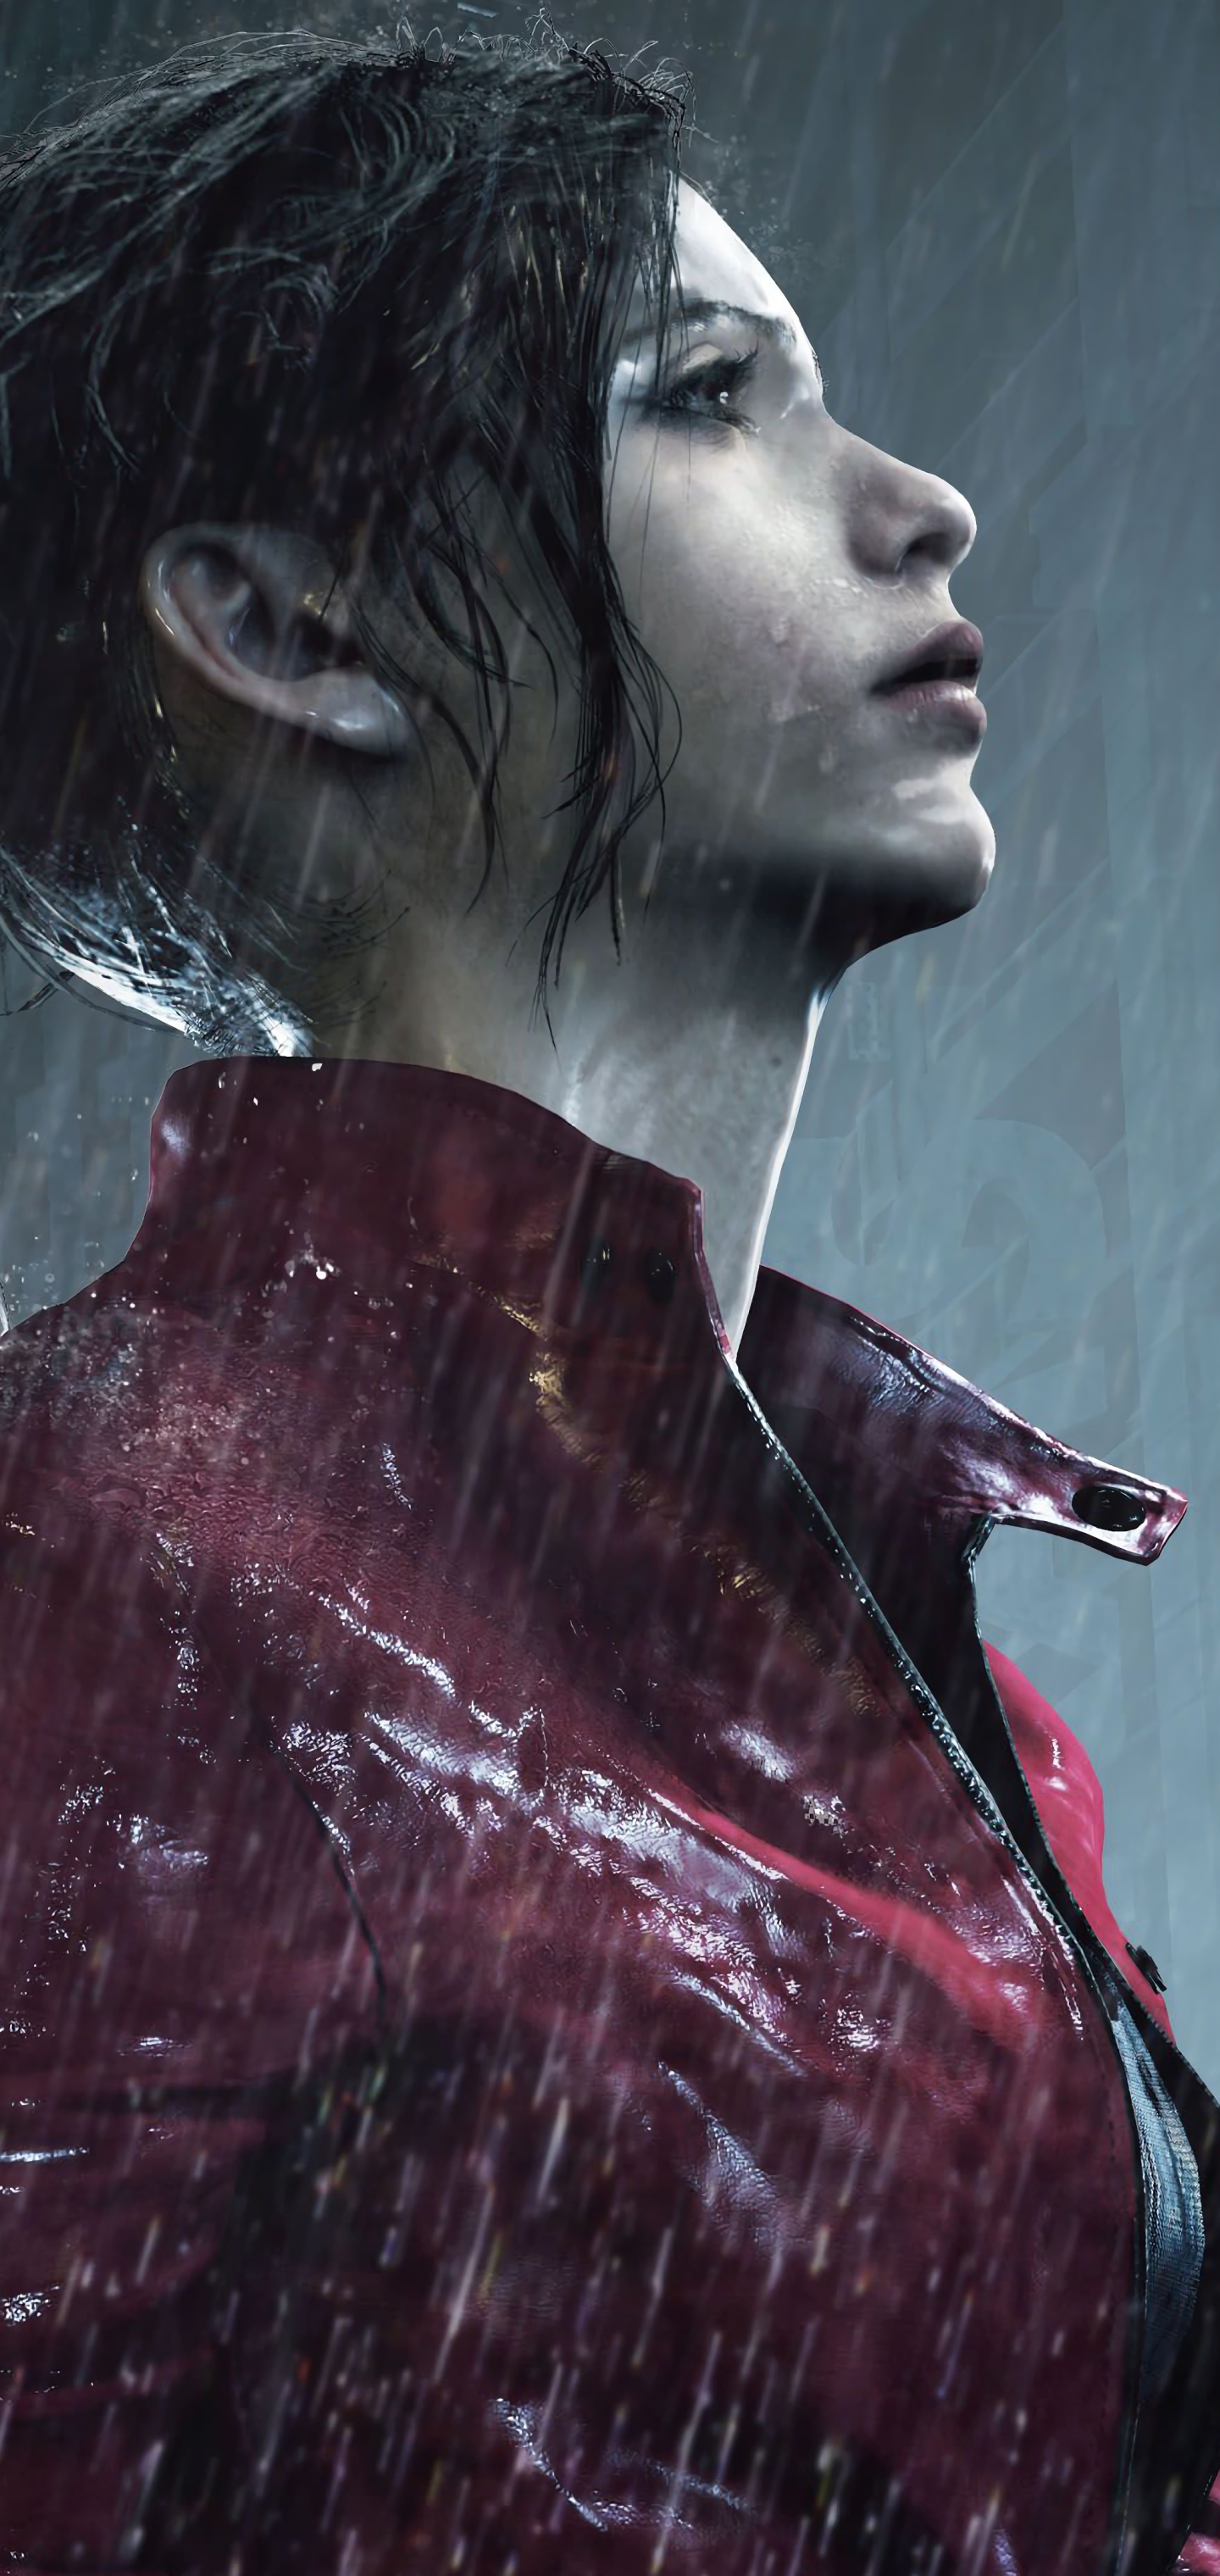 Baixar papel de parede para celular de Resident Evil, Videogame, Claire Redfield, Resident Evil 2 (2019) gratuito.